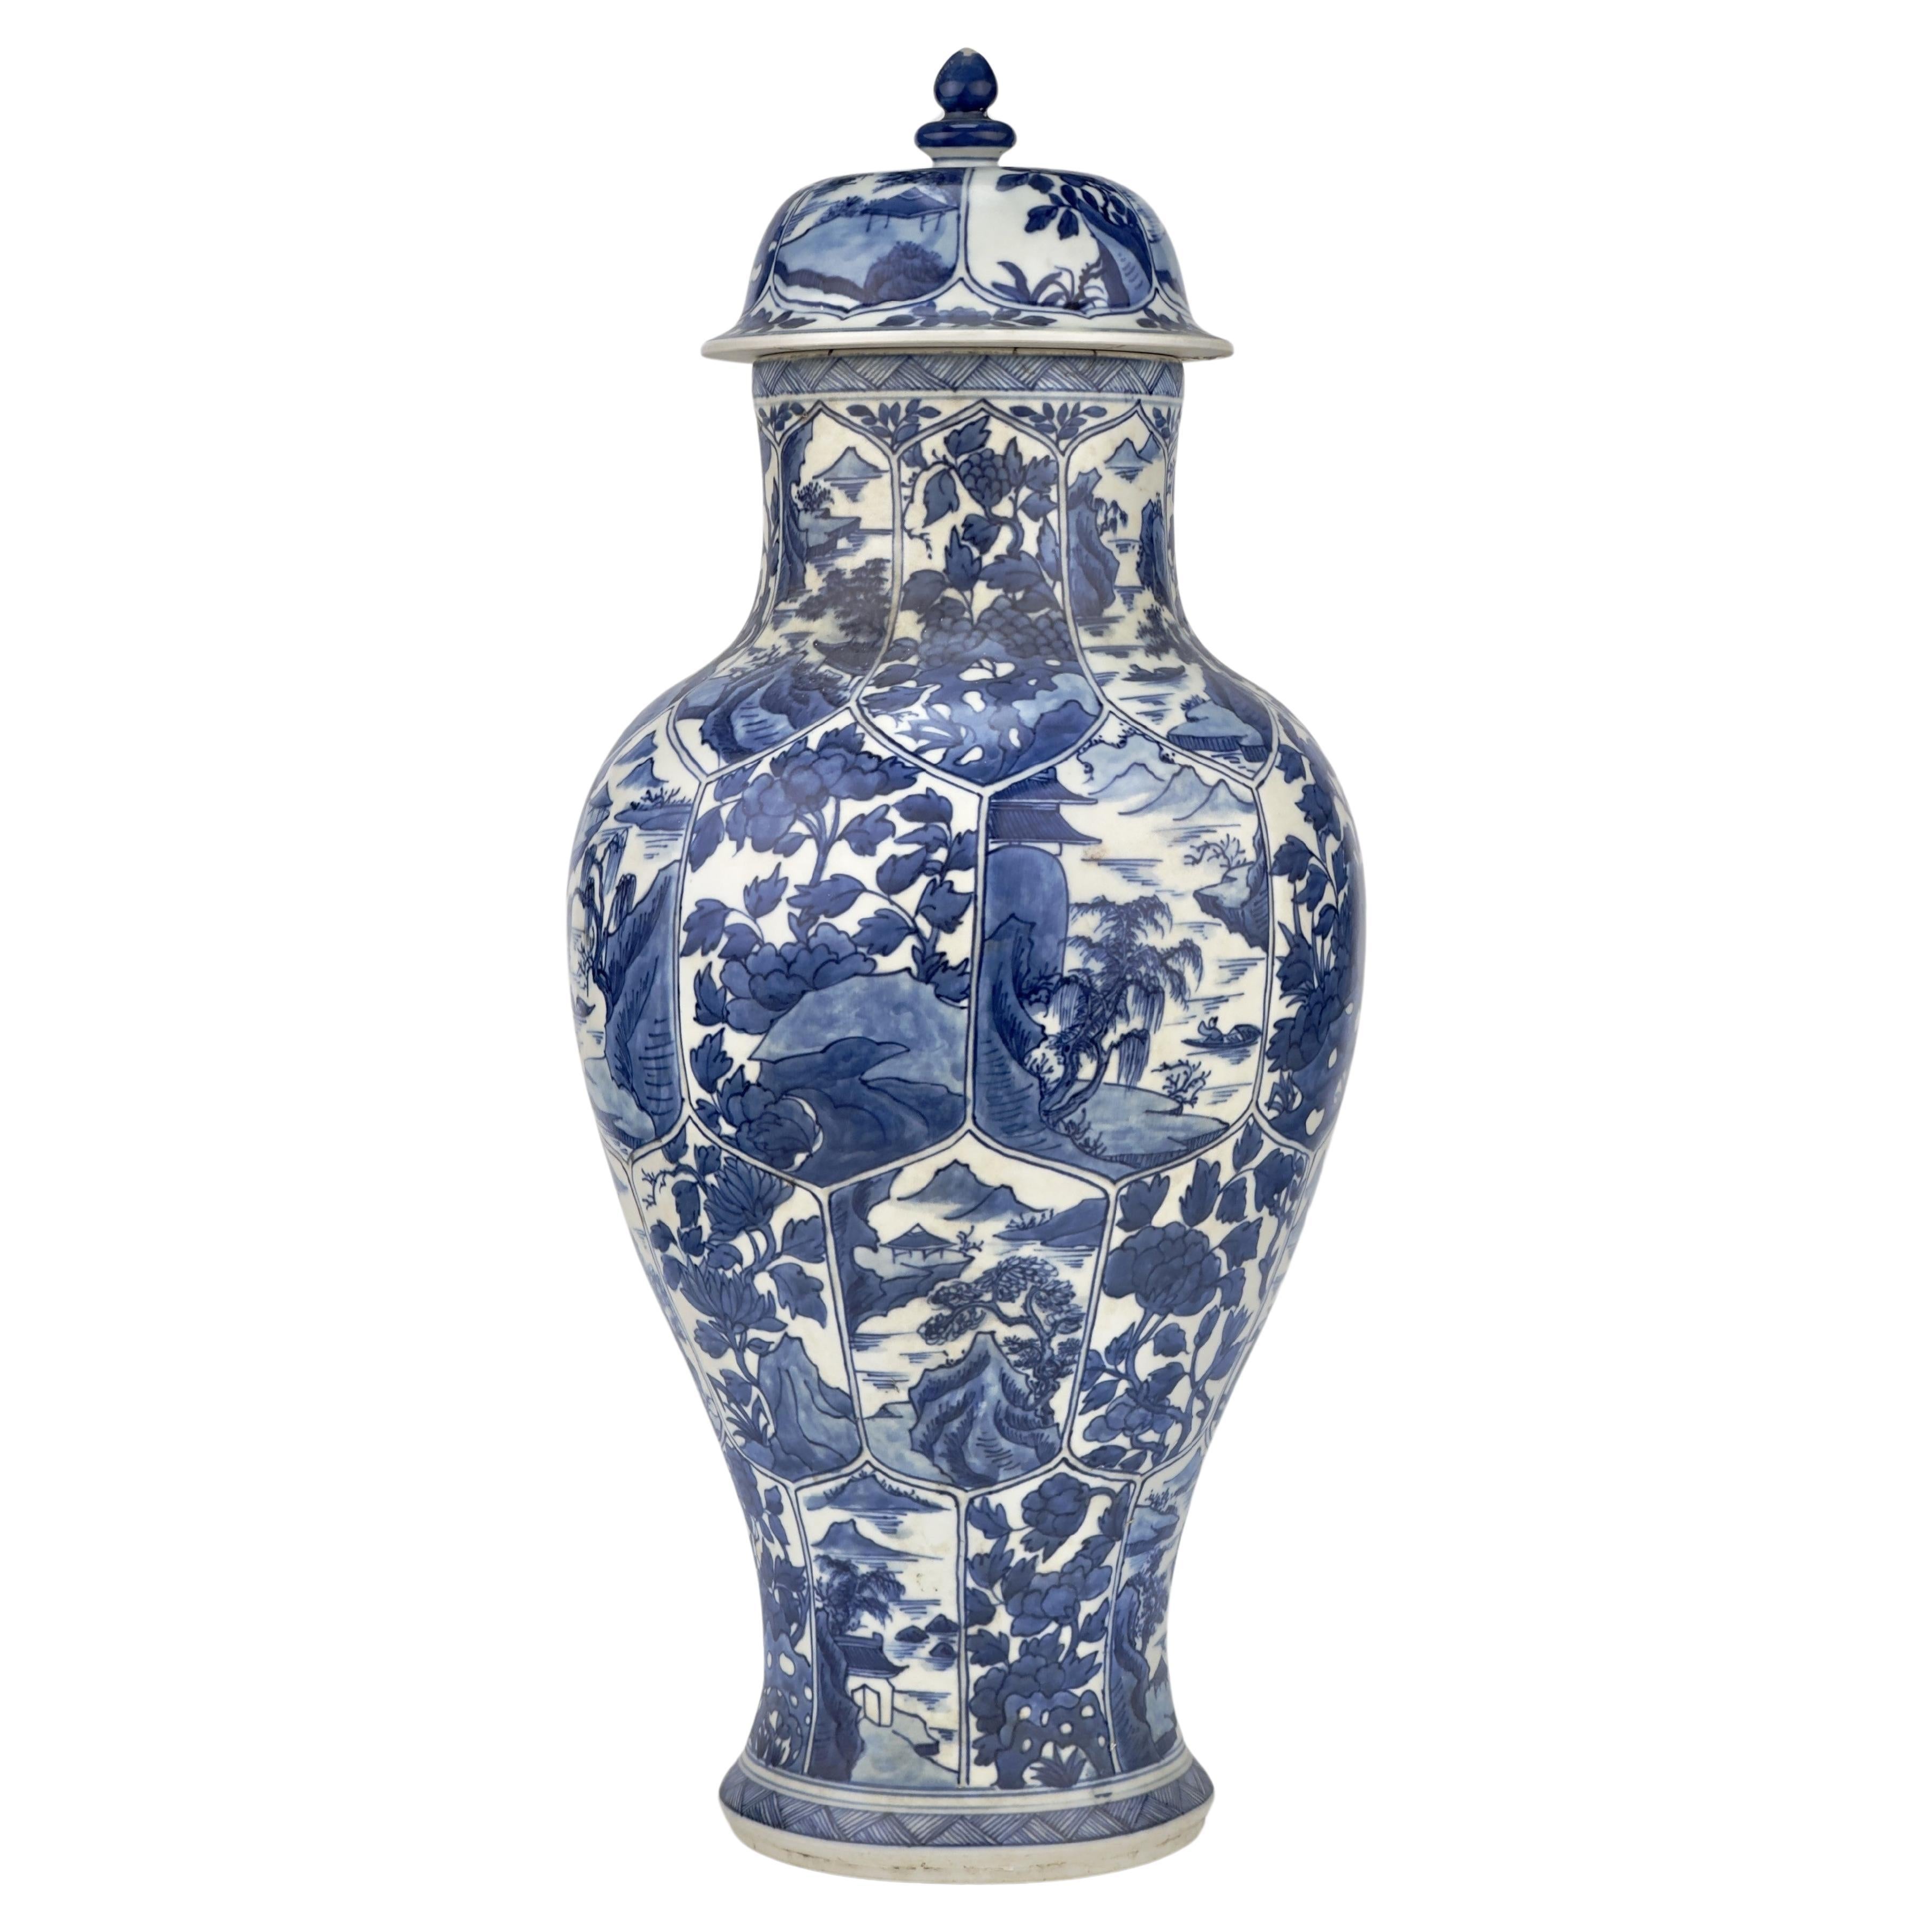 Large Rare Blue and White Baluster Vase, Qing Dynasty, Kangxi, Circa 1690